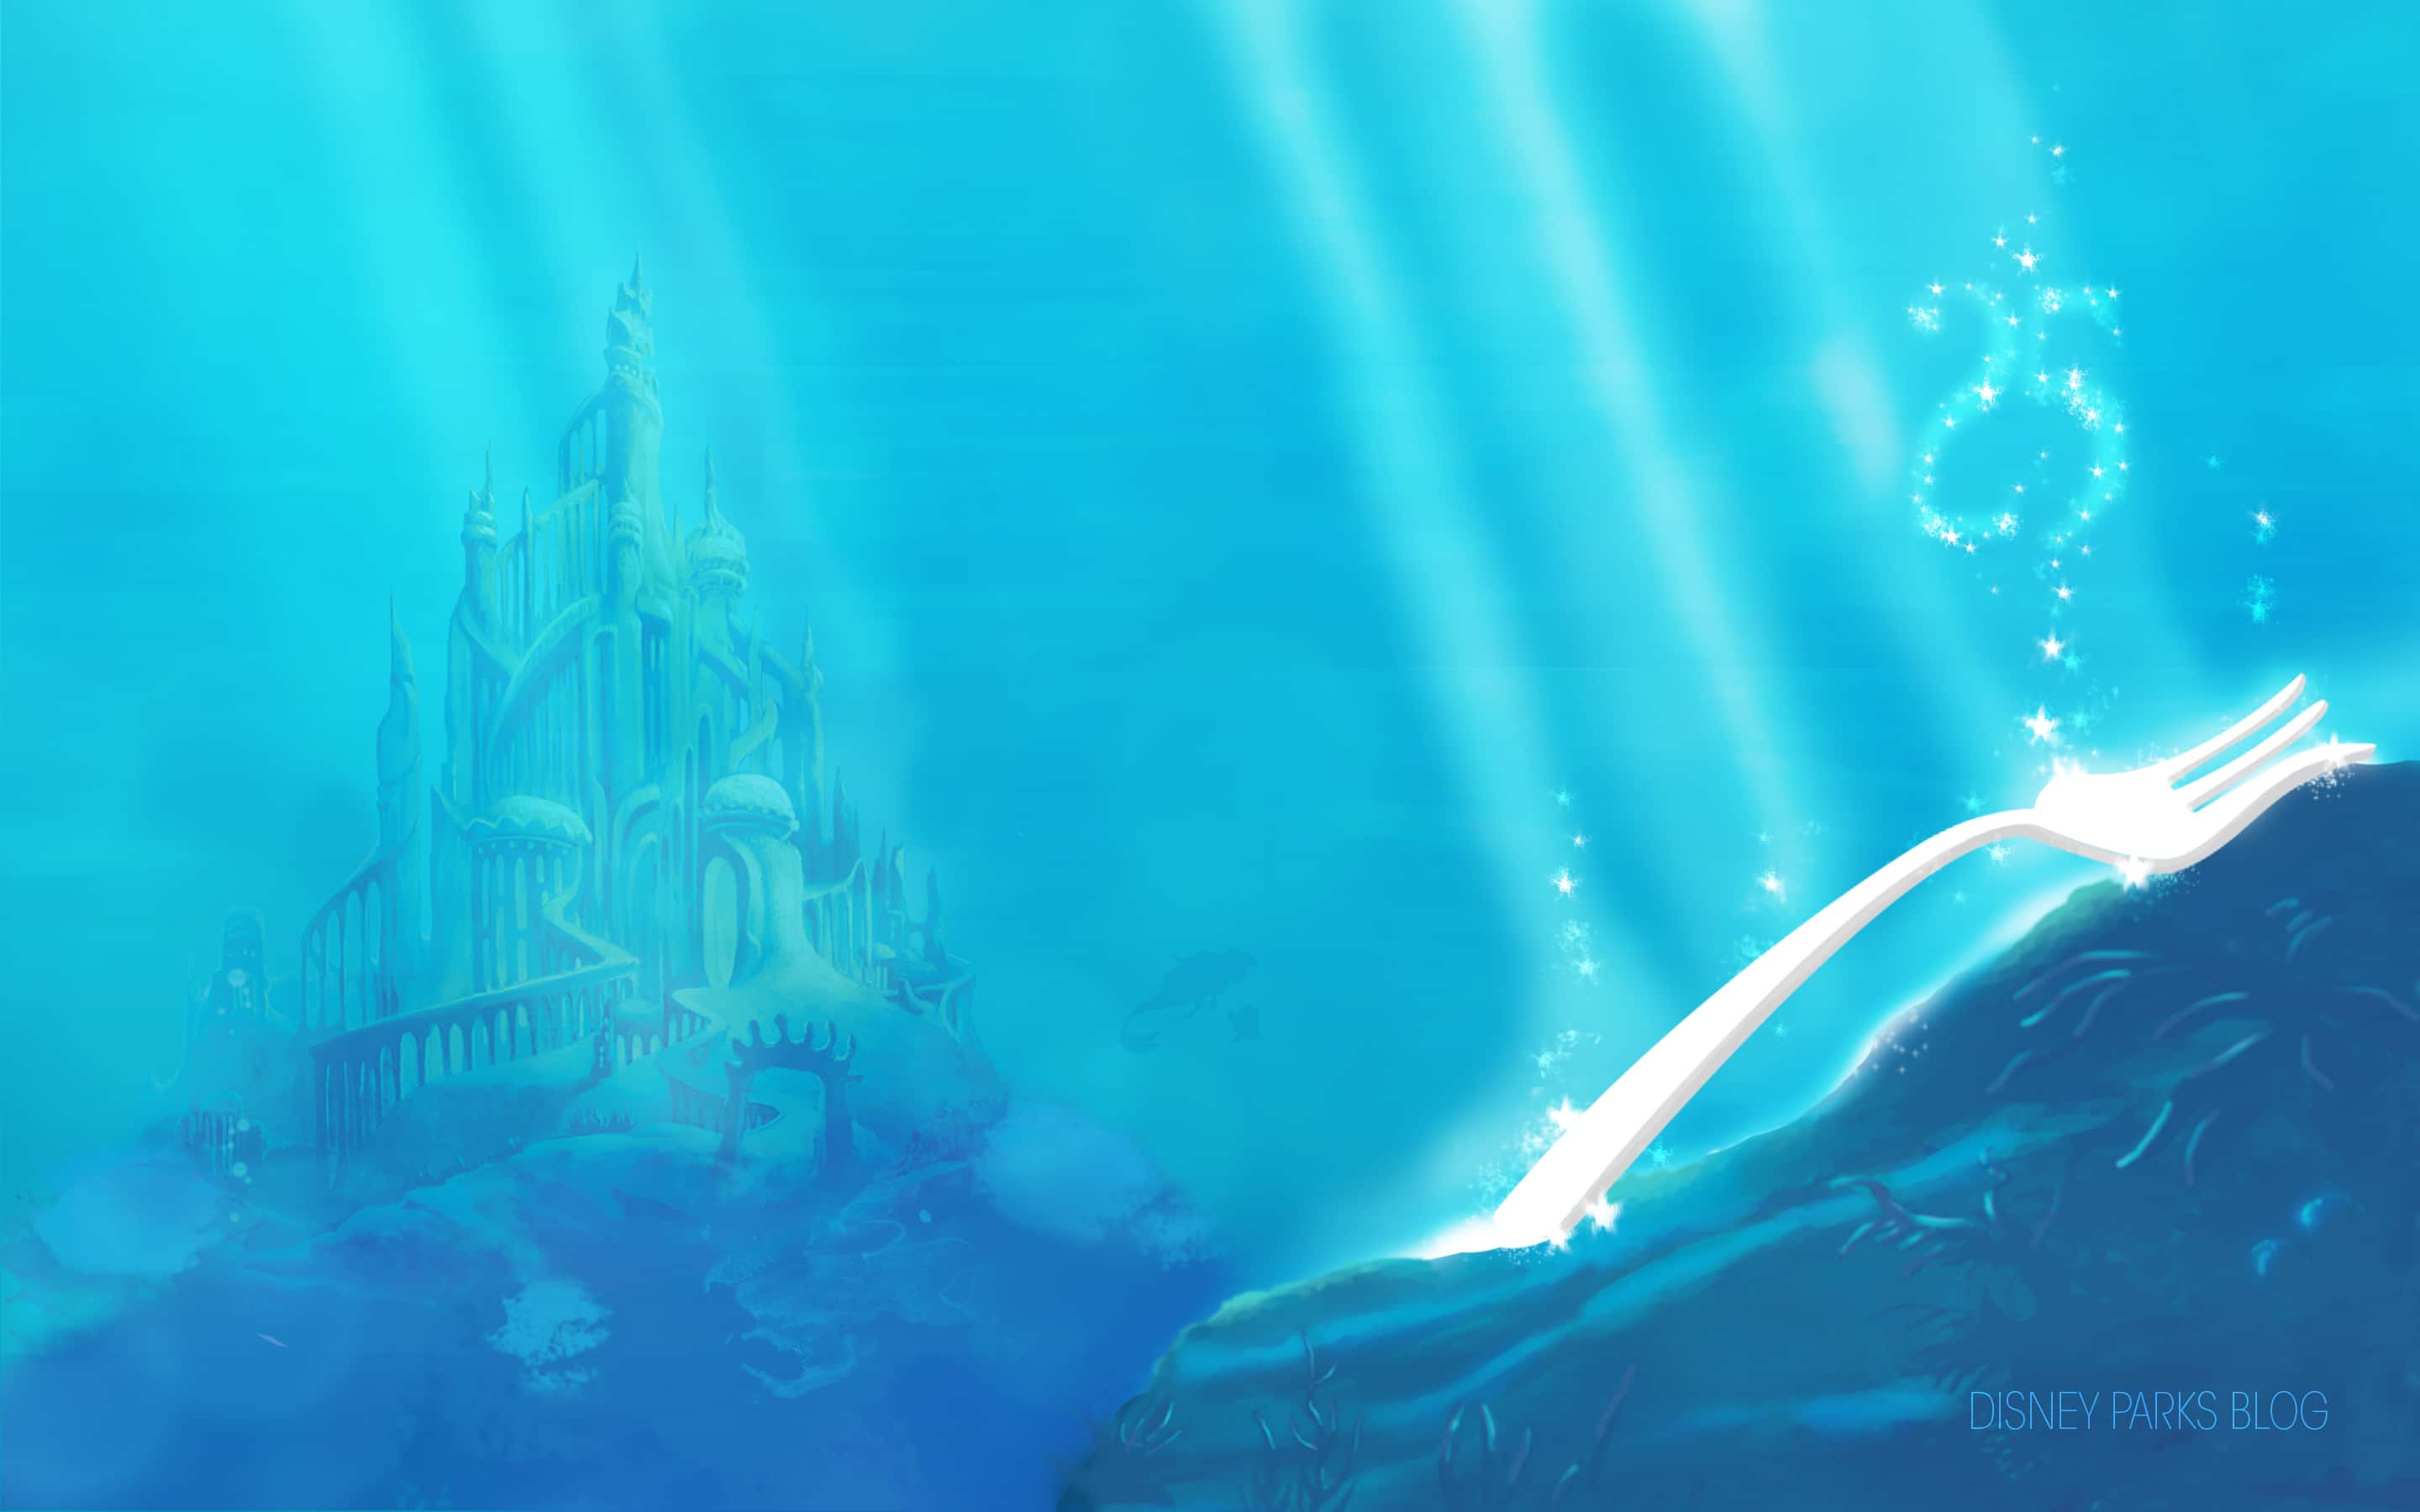 25th Anniversary of 'The Little Mermaid'. Disney Parks Blog